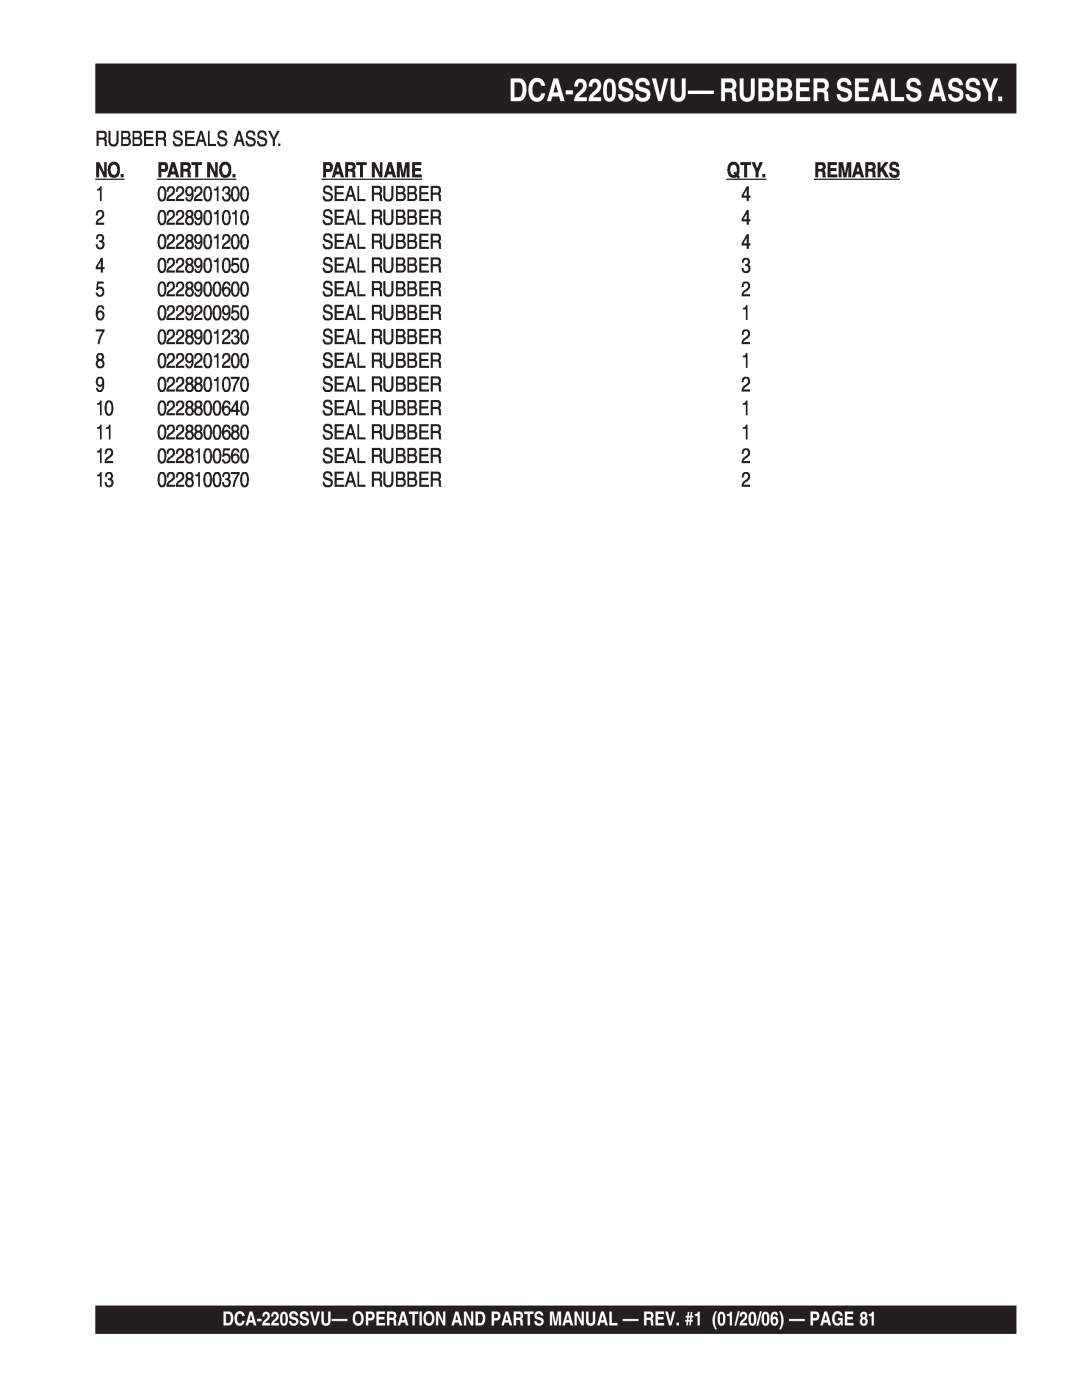 Multiquip operation manual DCA-220SSVU—RUBBER SEALS ASSY, Part No, Part Name, 0229201300 